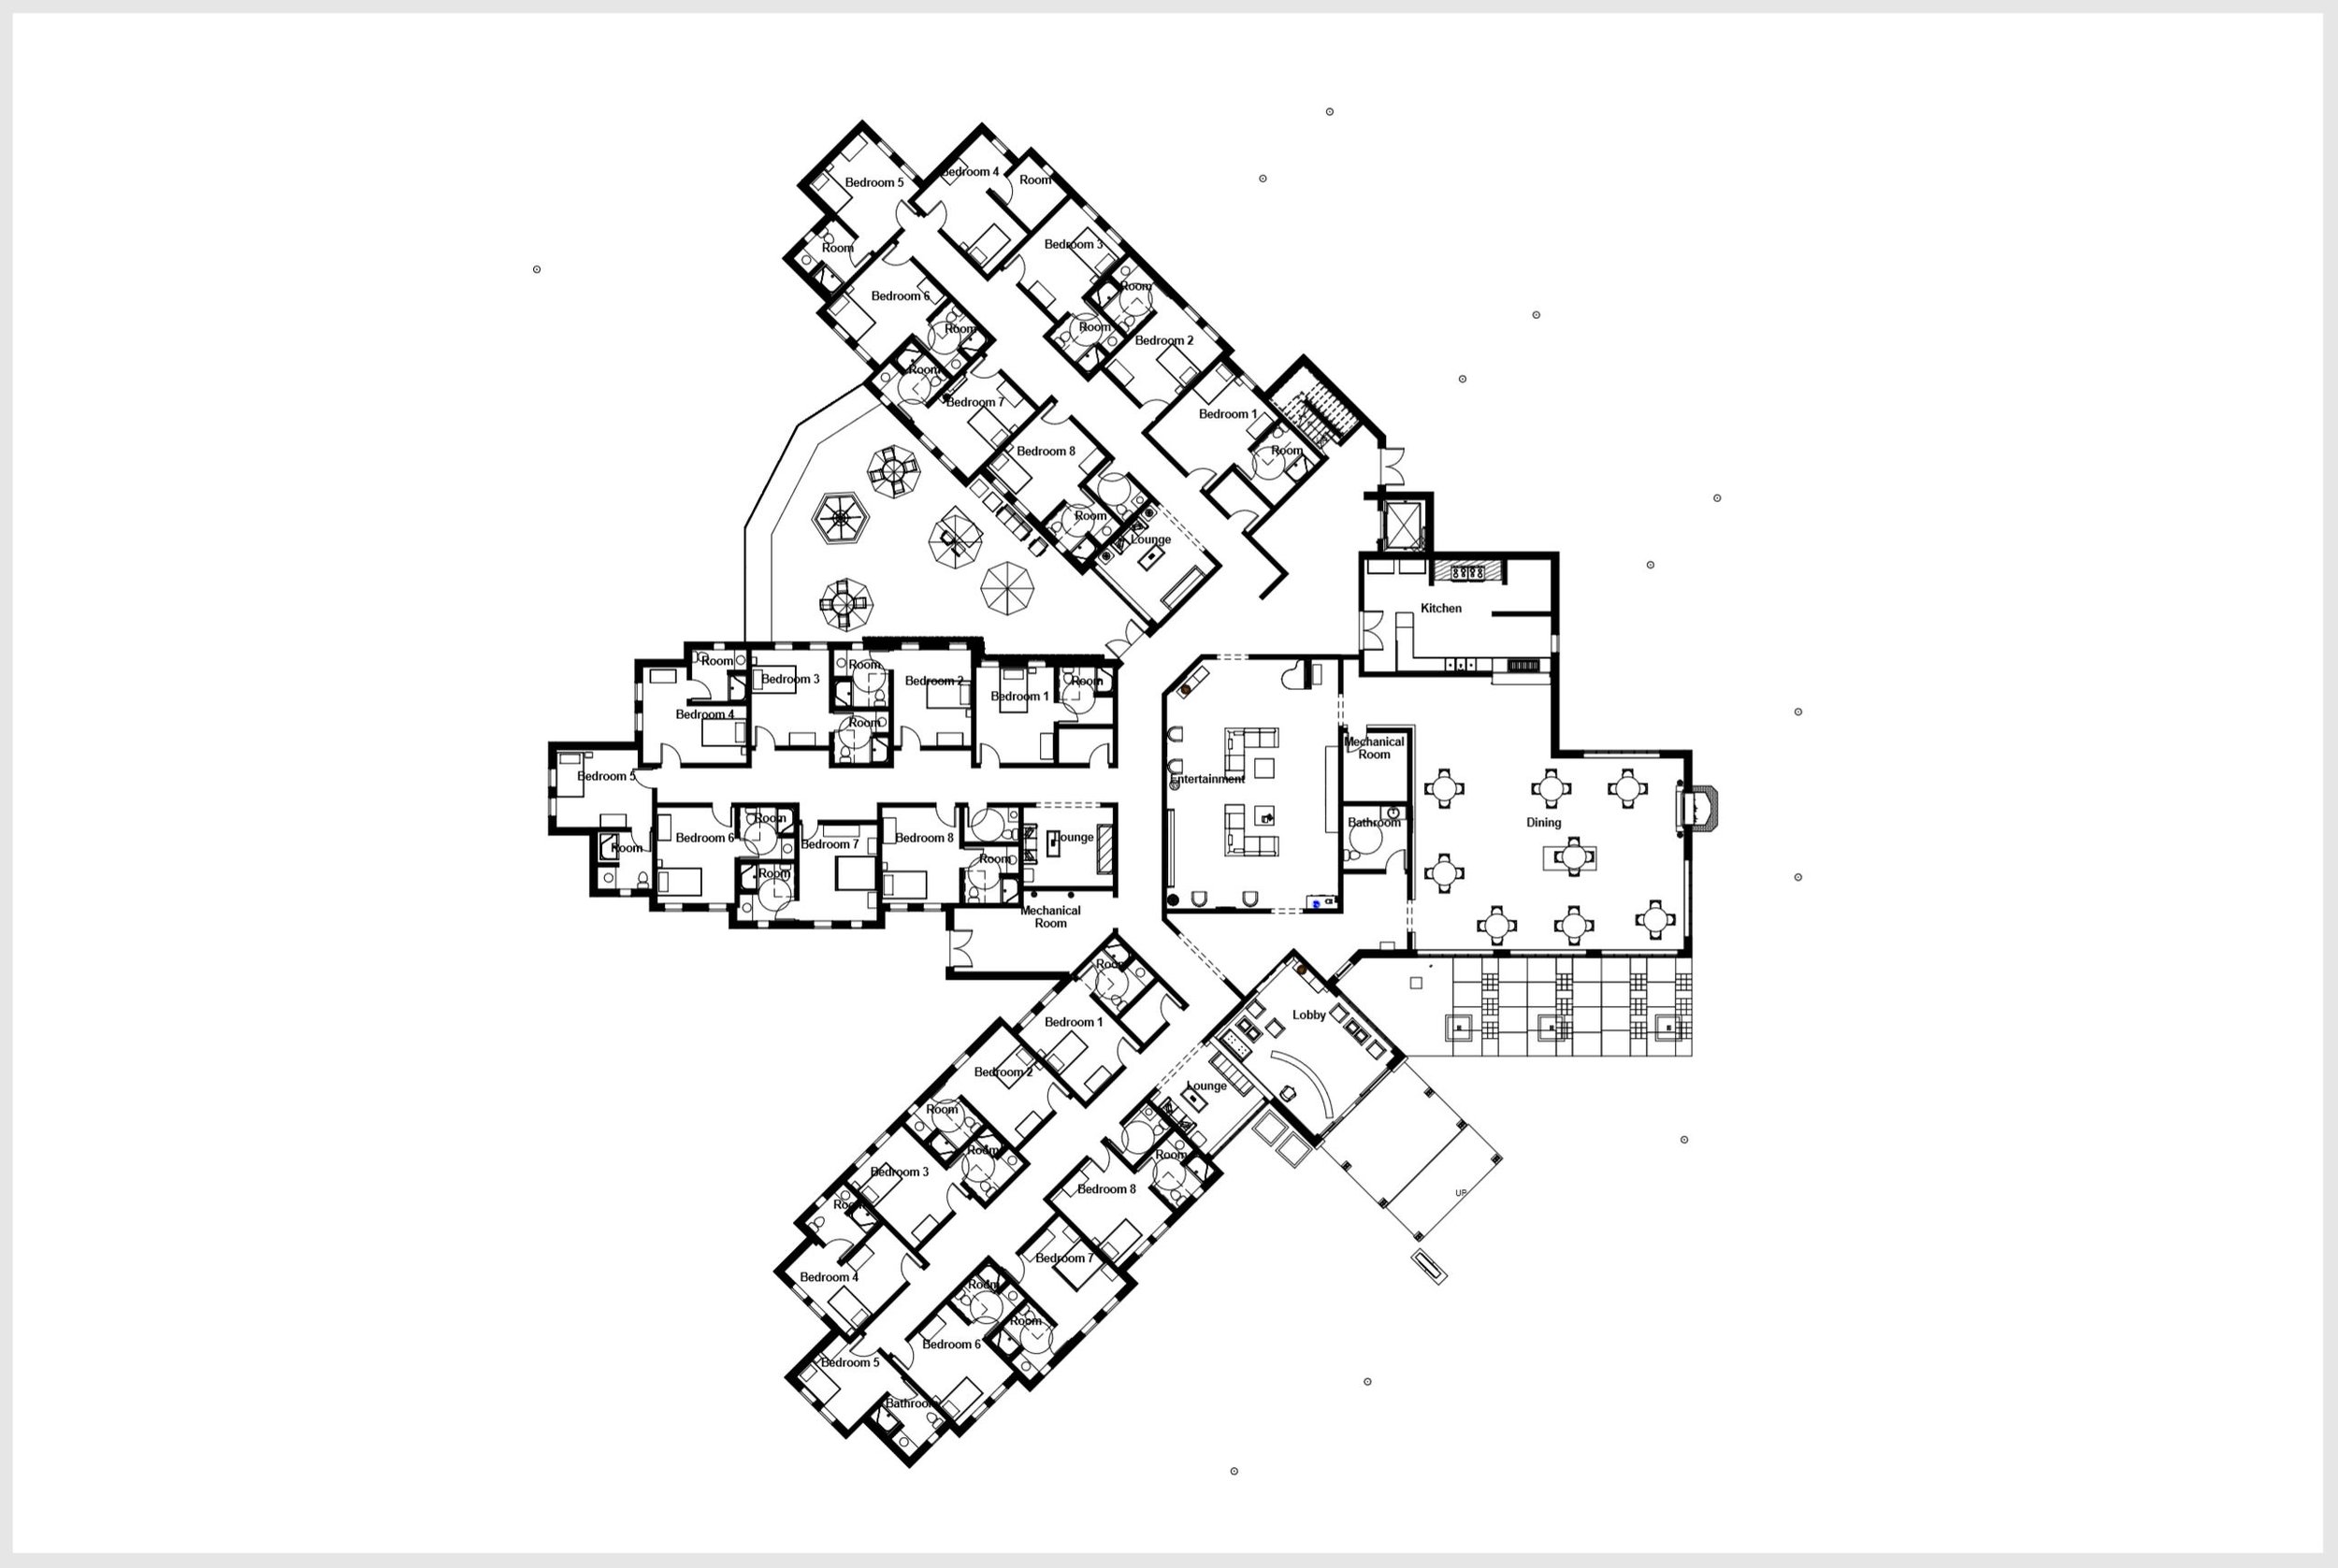 assisted living building design 1ST FL PLAN - TARCHITECTS.JPG